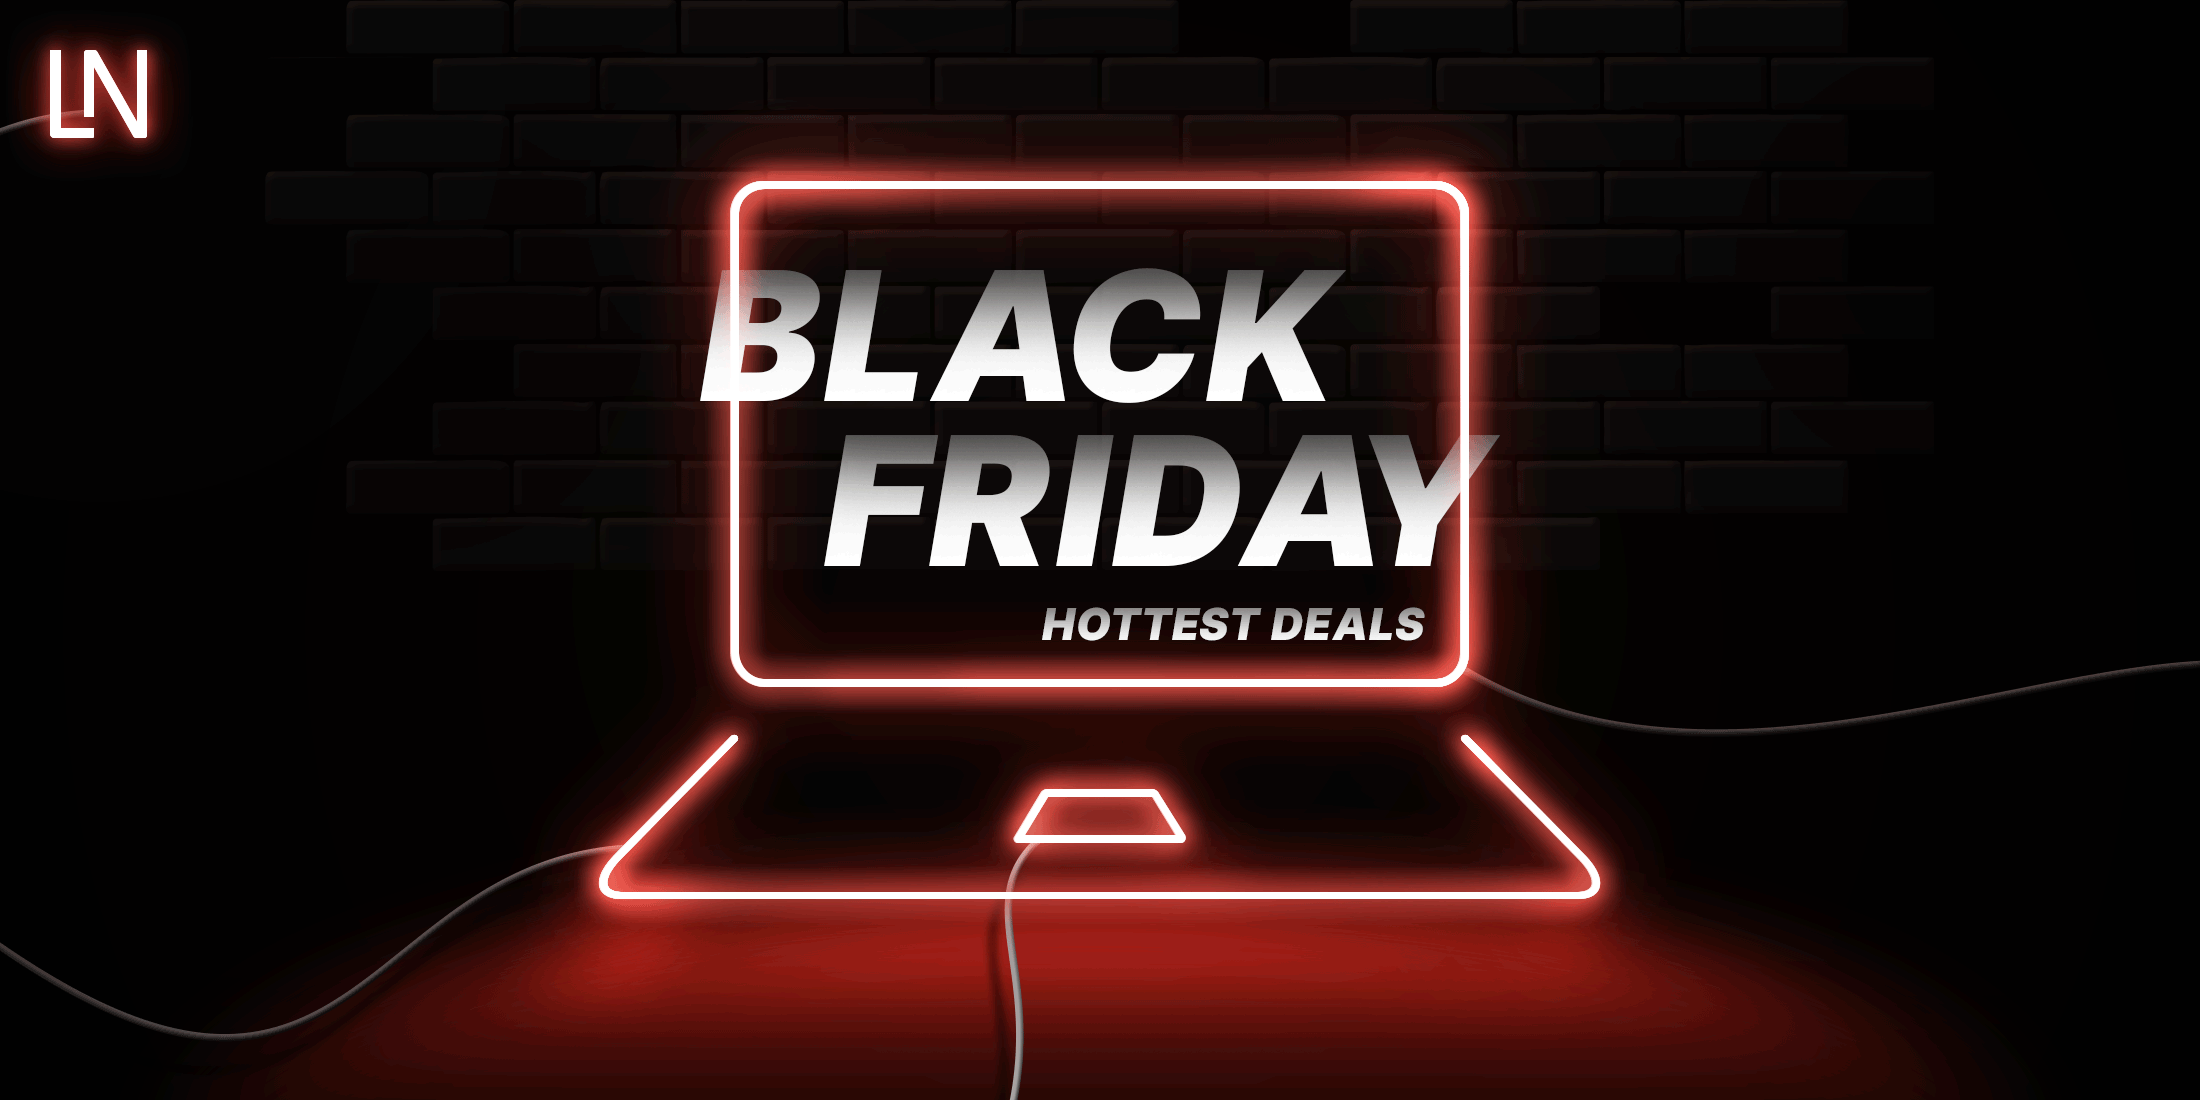 The Hottest Black Friday Deals image